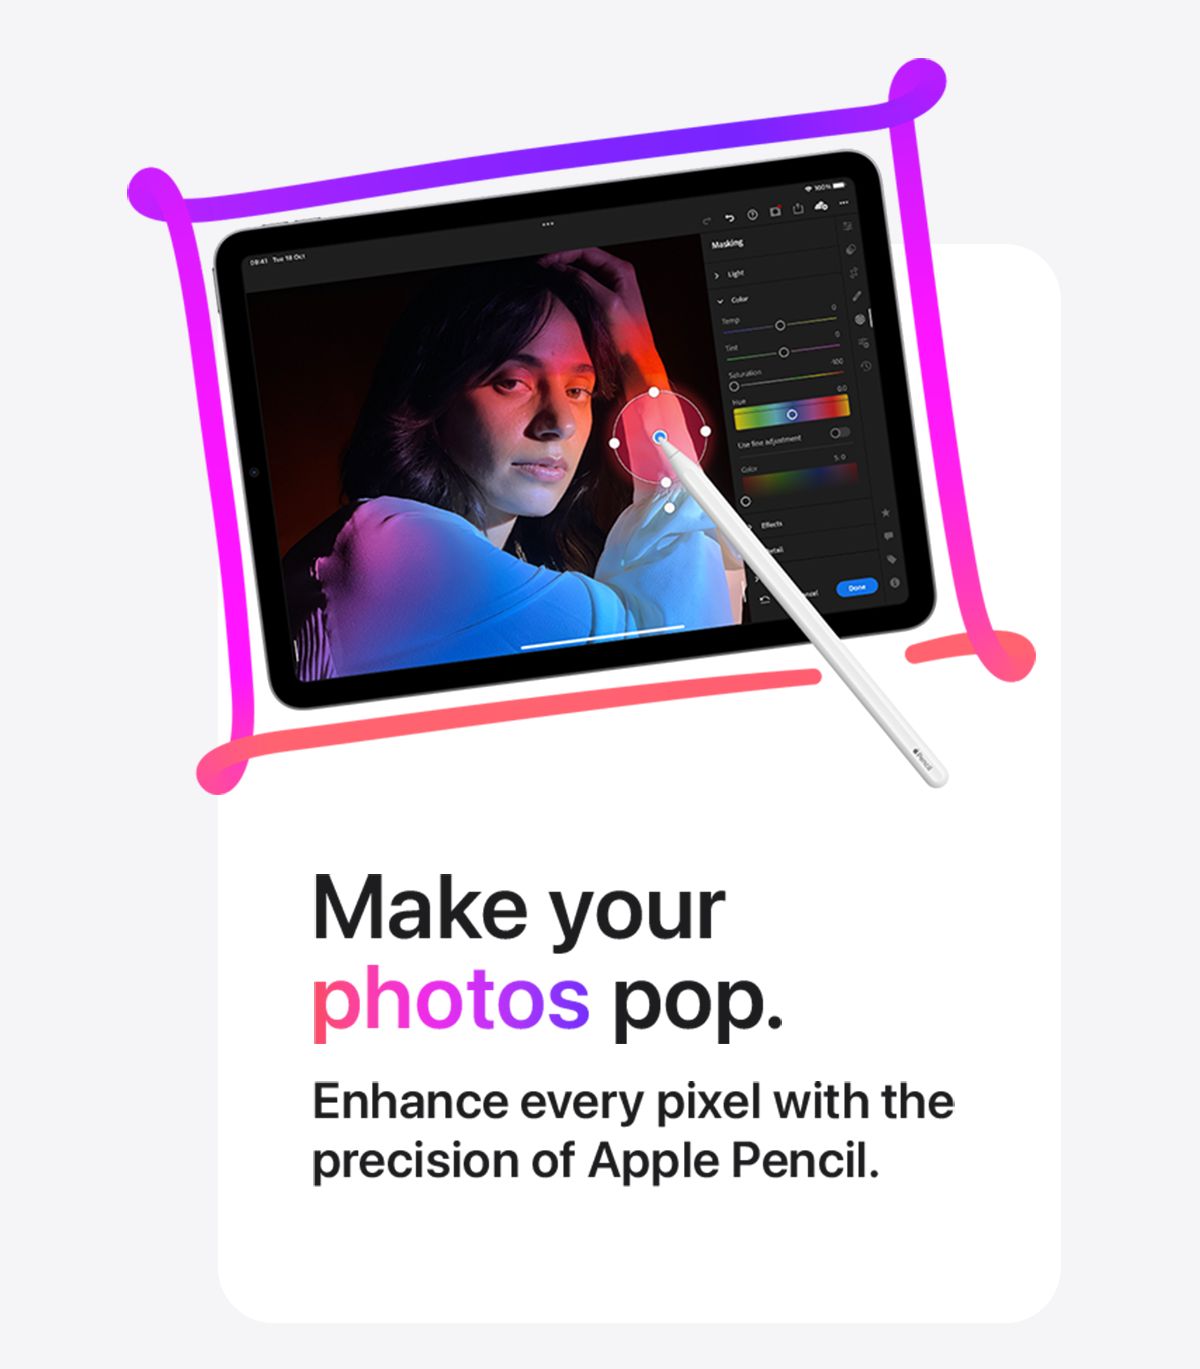 Apple Do More on iPad Photos